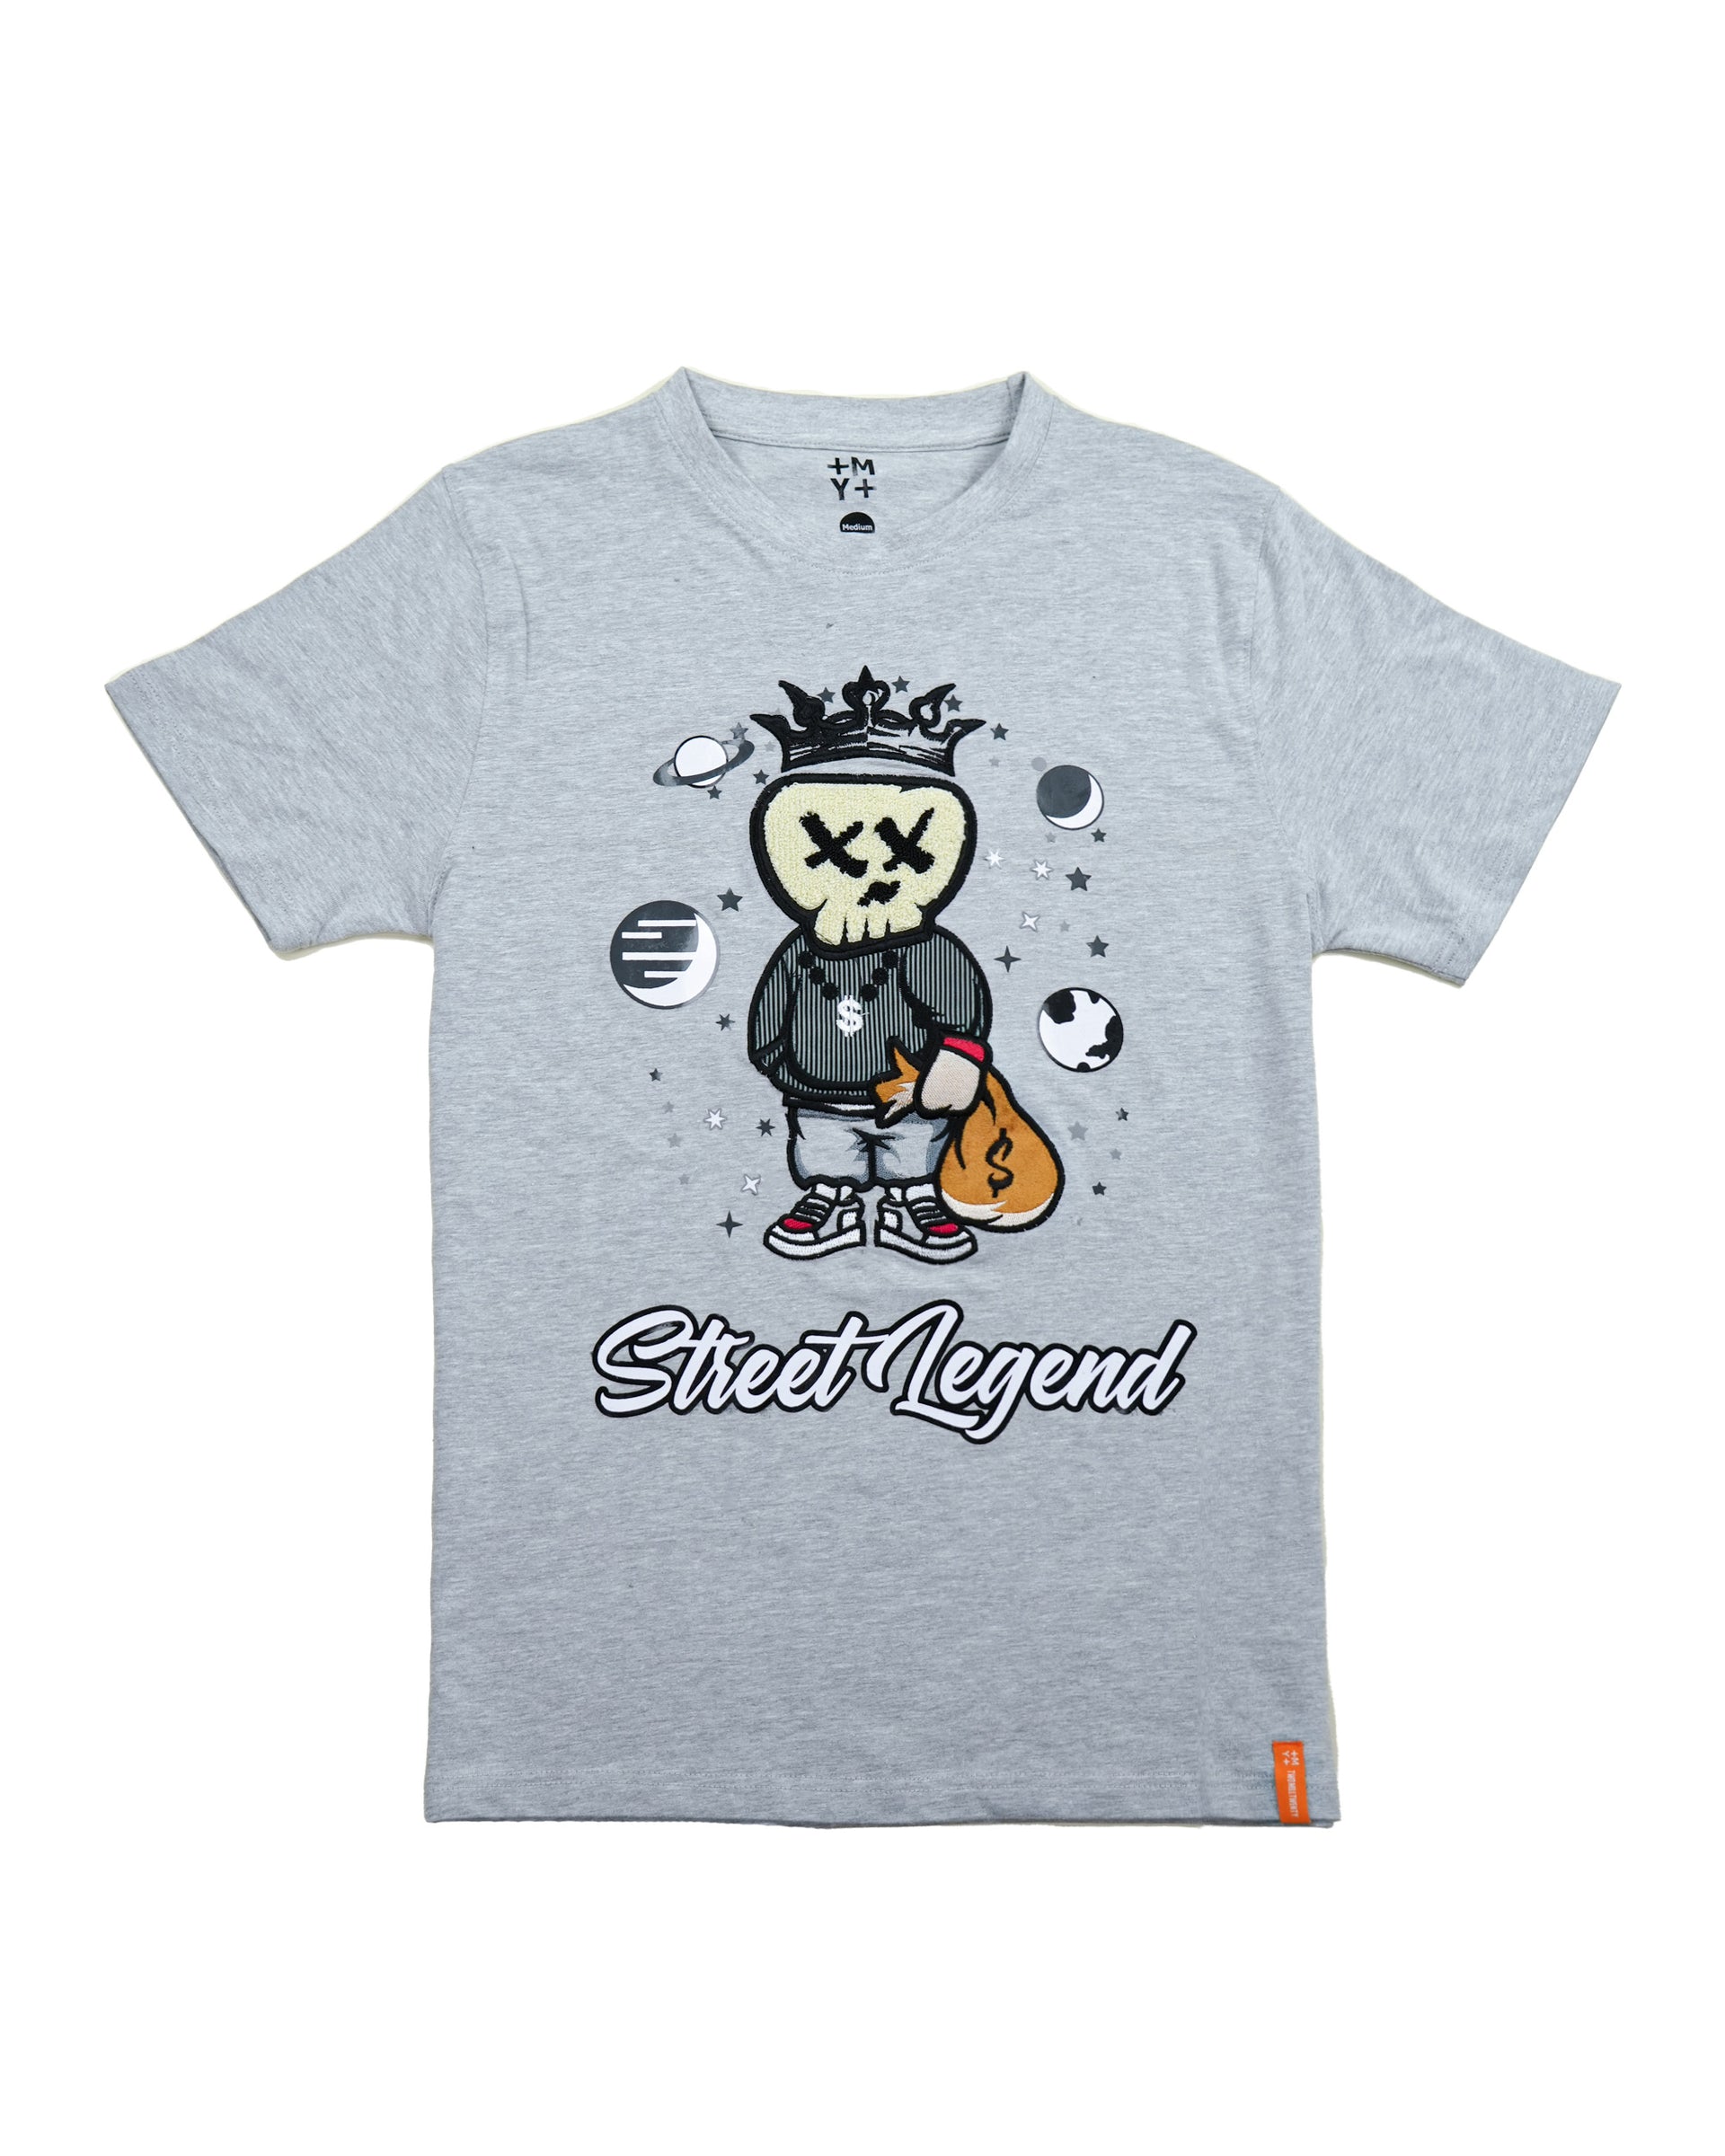 Men's "Street Legend" Graphic T-Shirt | Heather Grey